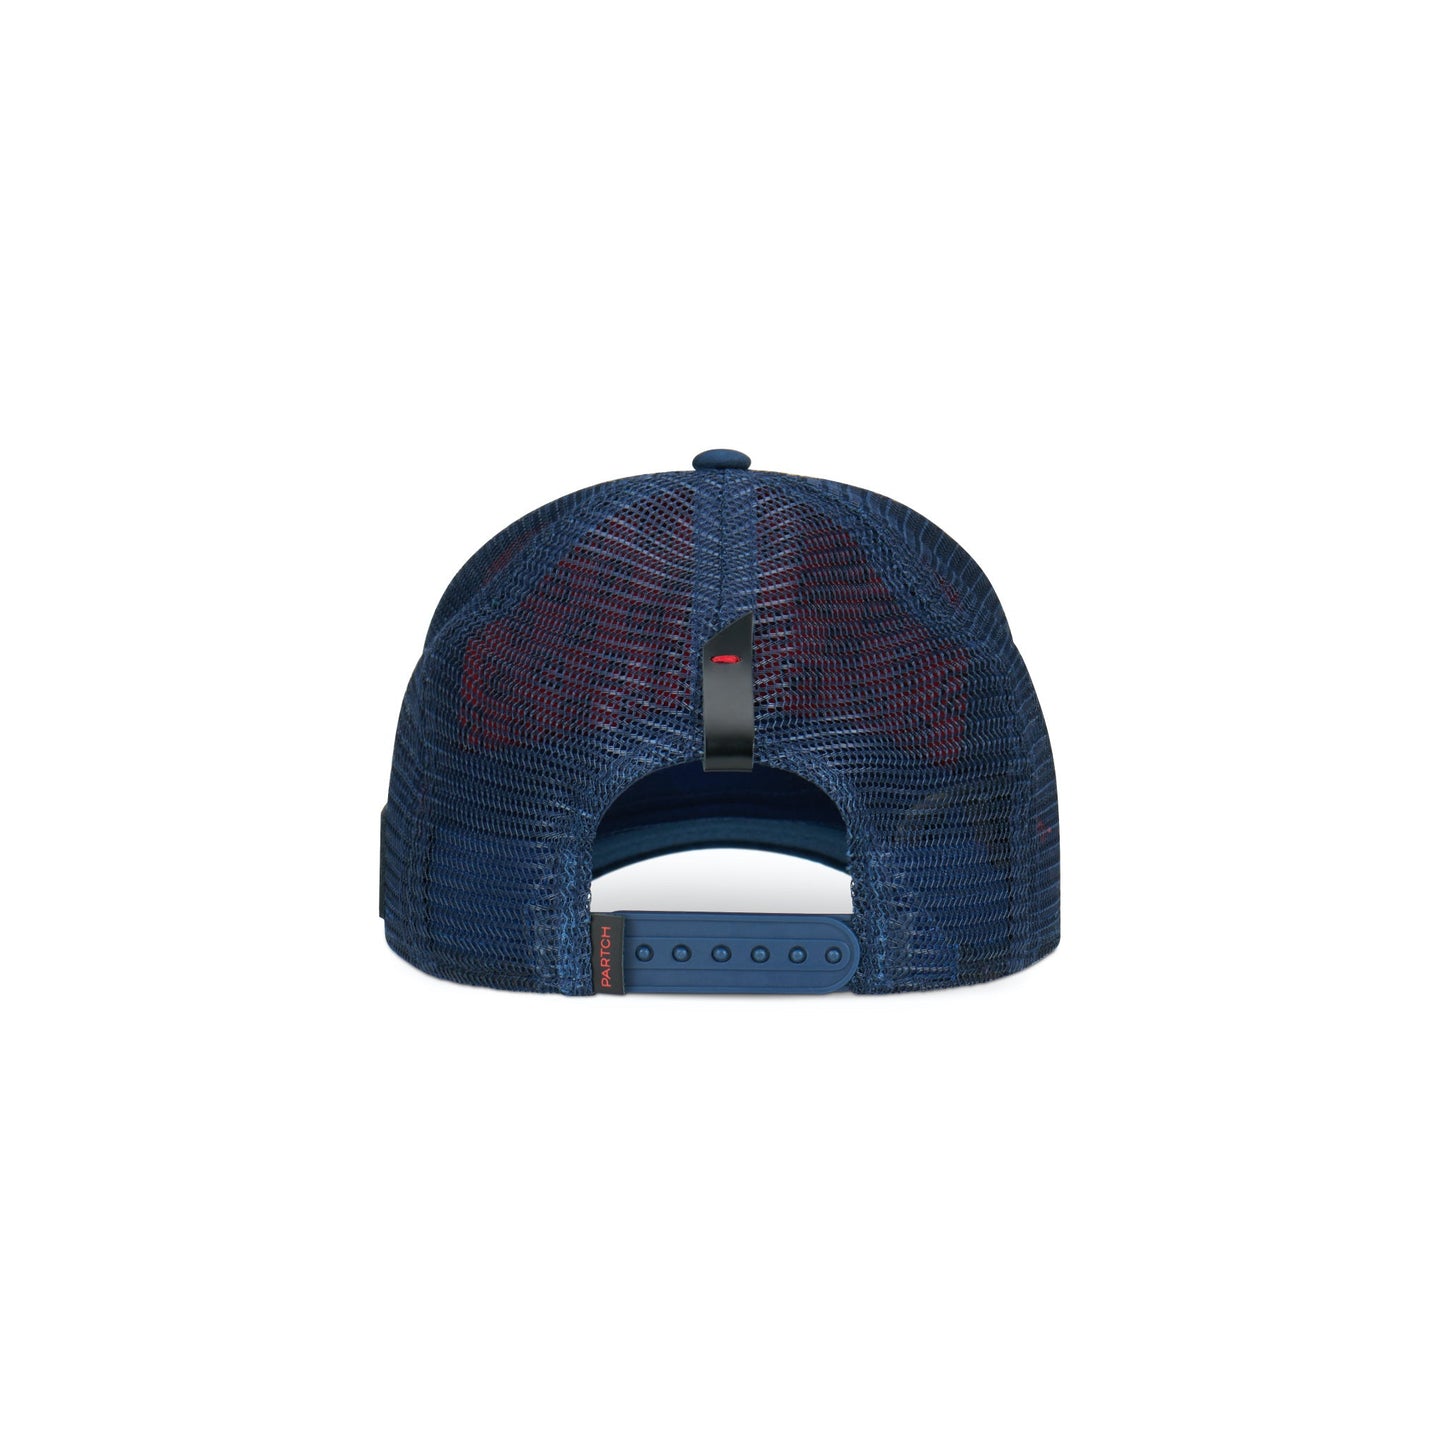 Partch Trucker Hat Navy Blue with PARTCH-Clip Pop Love Back View